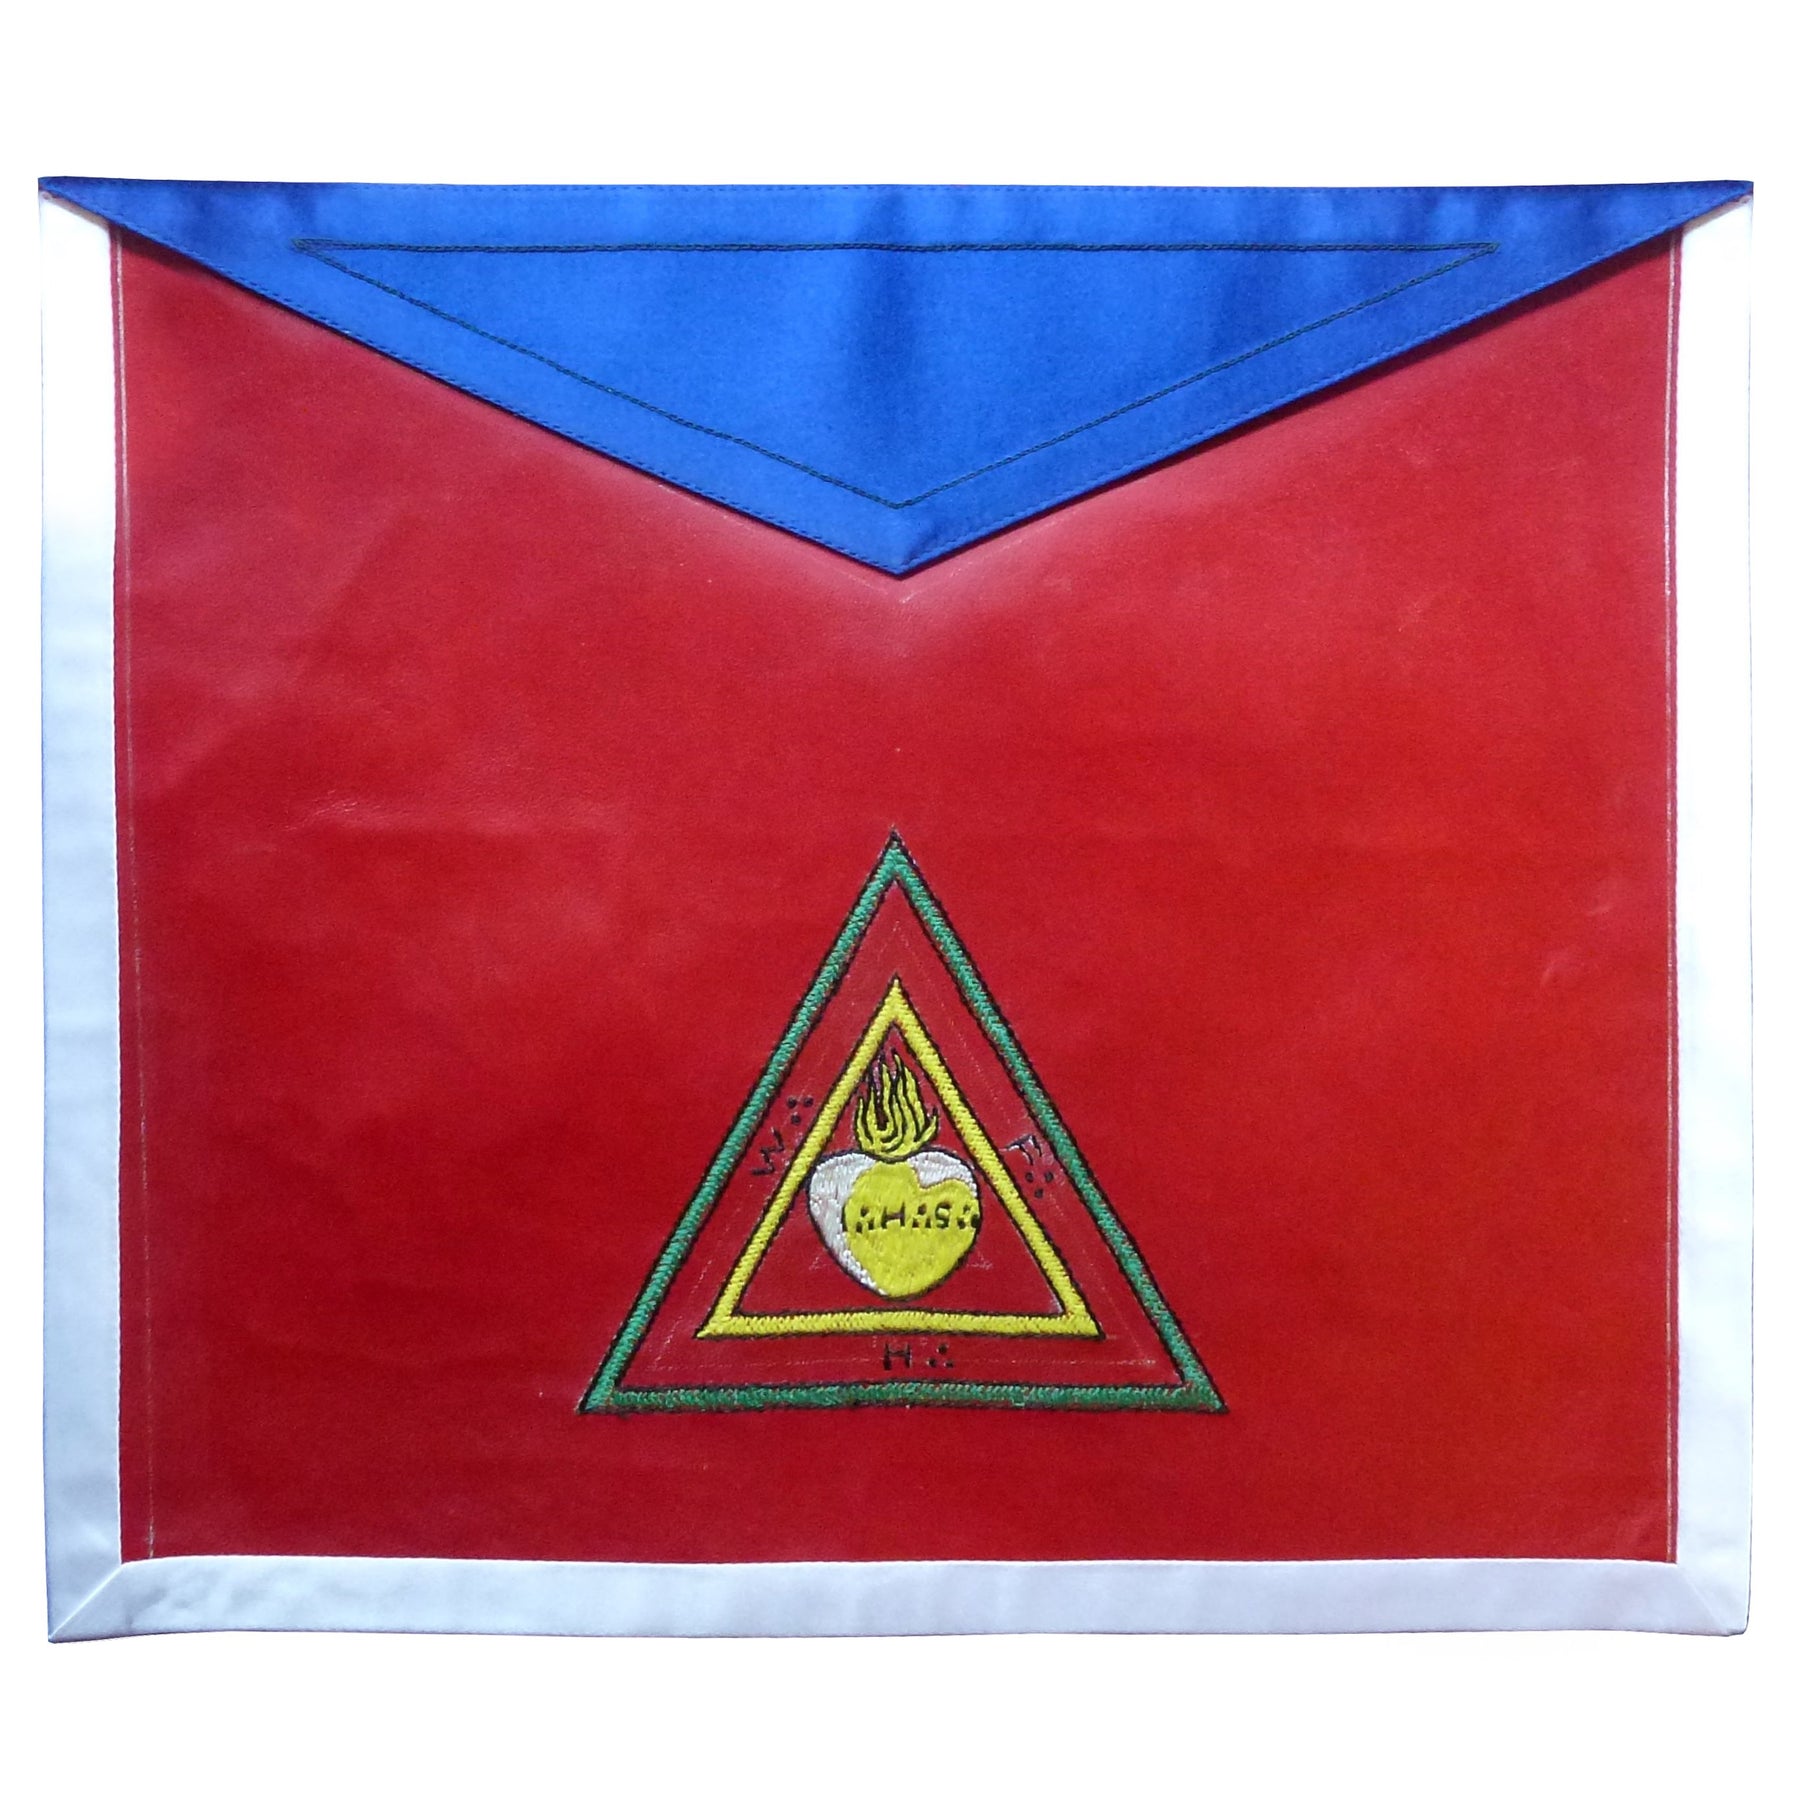 Masonic Scottish Rite Masonic Apron - AASR - 26th Degree - Bricks Masons